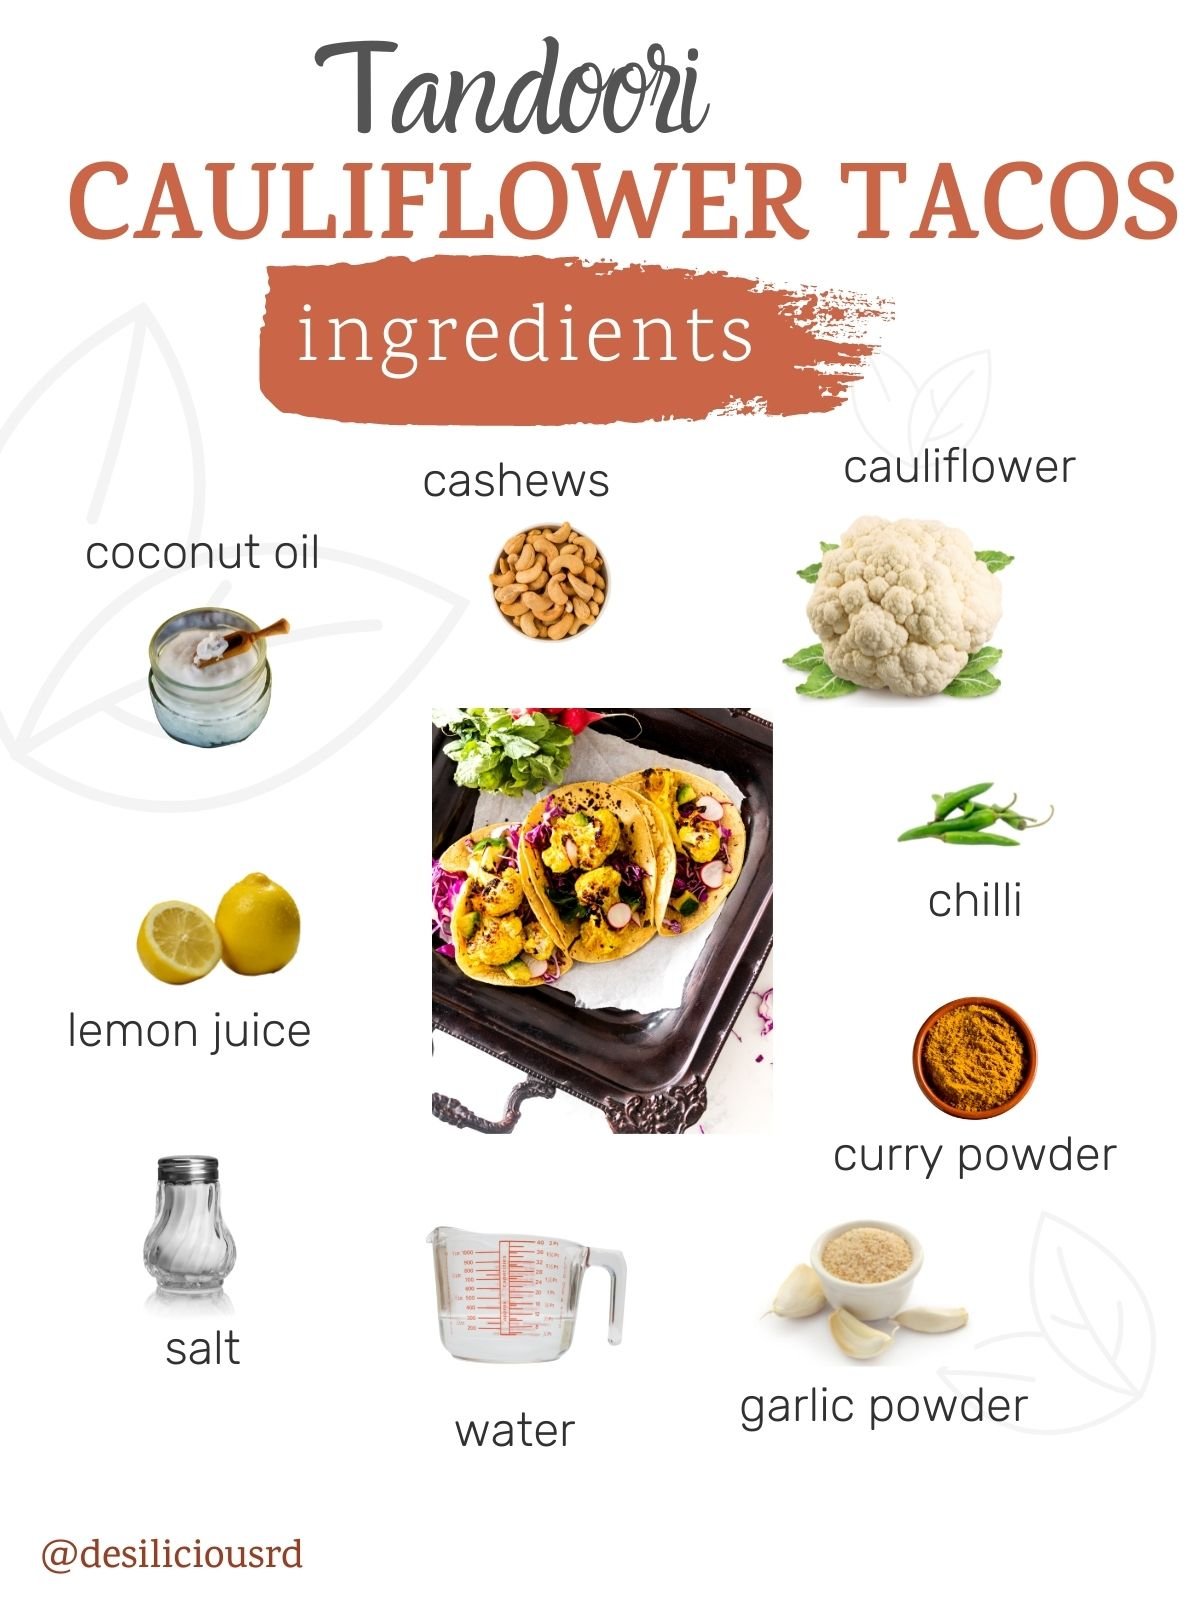 graphic showing ingredients needed to make tandoori cauliflower tacos